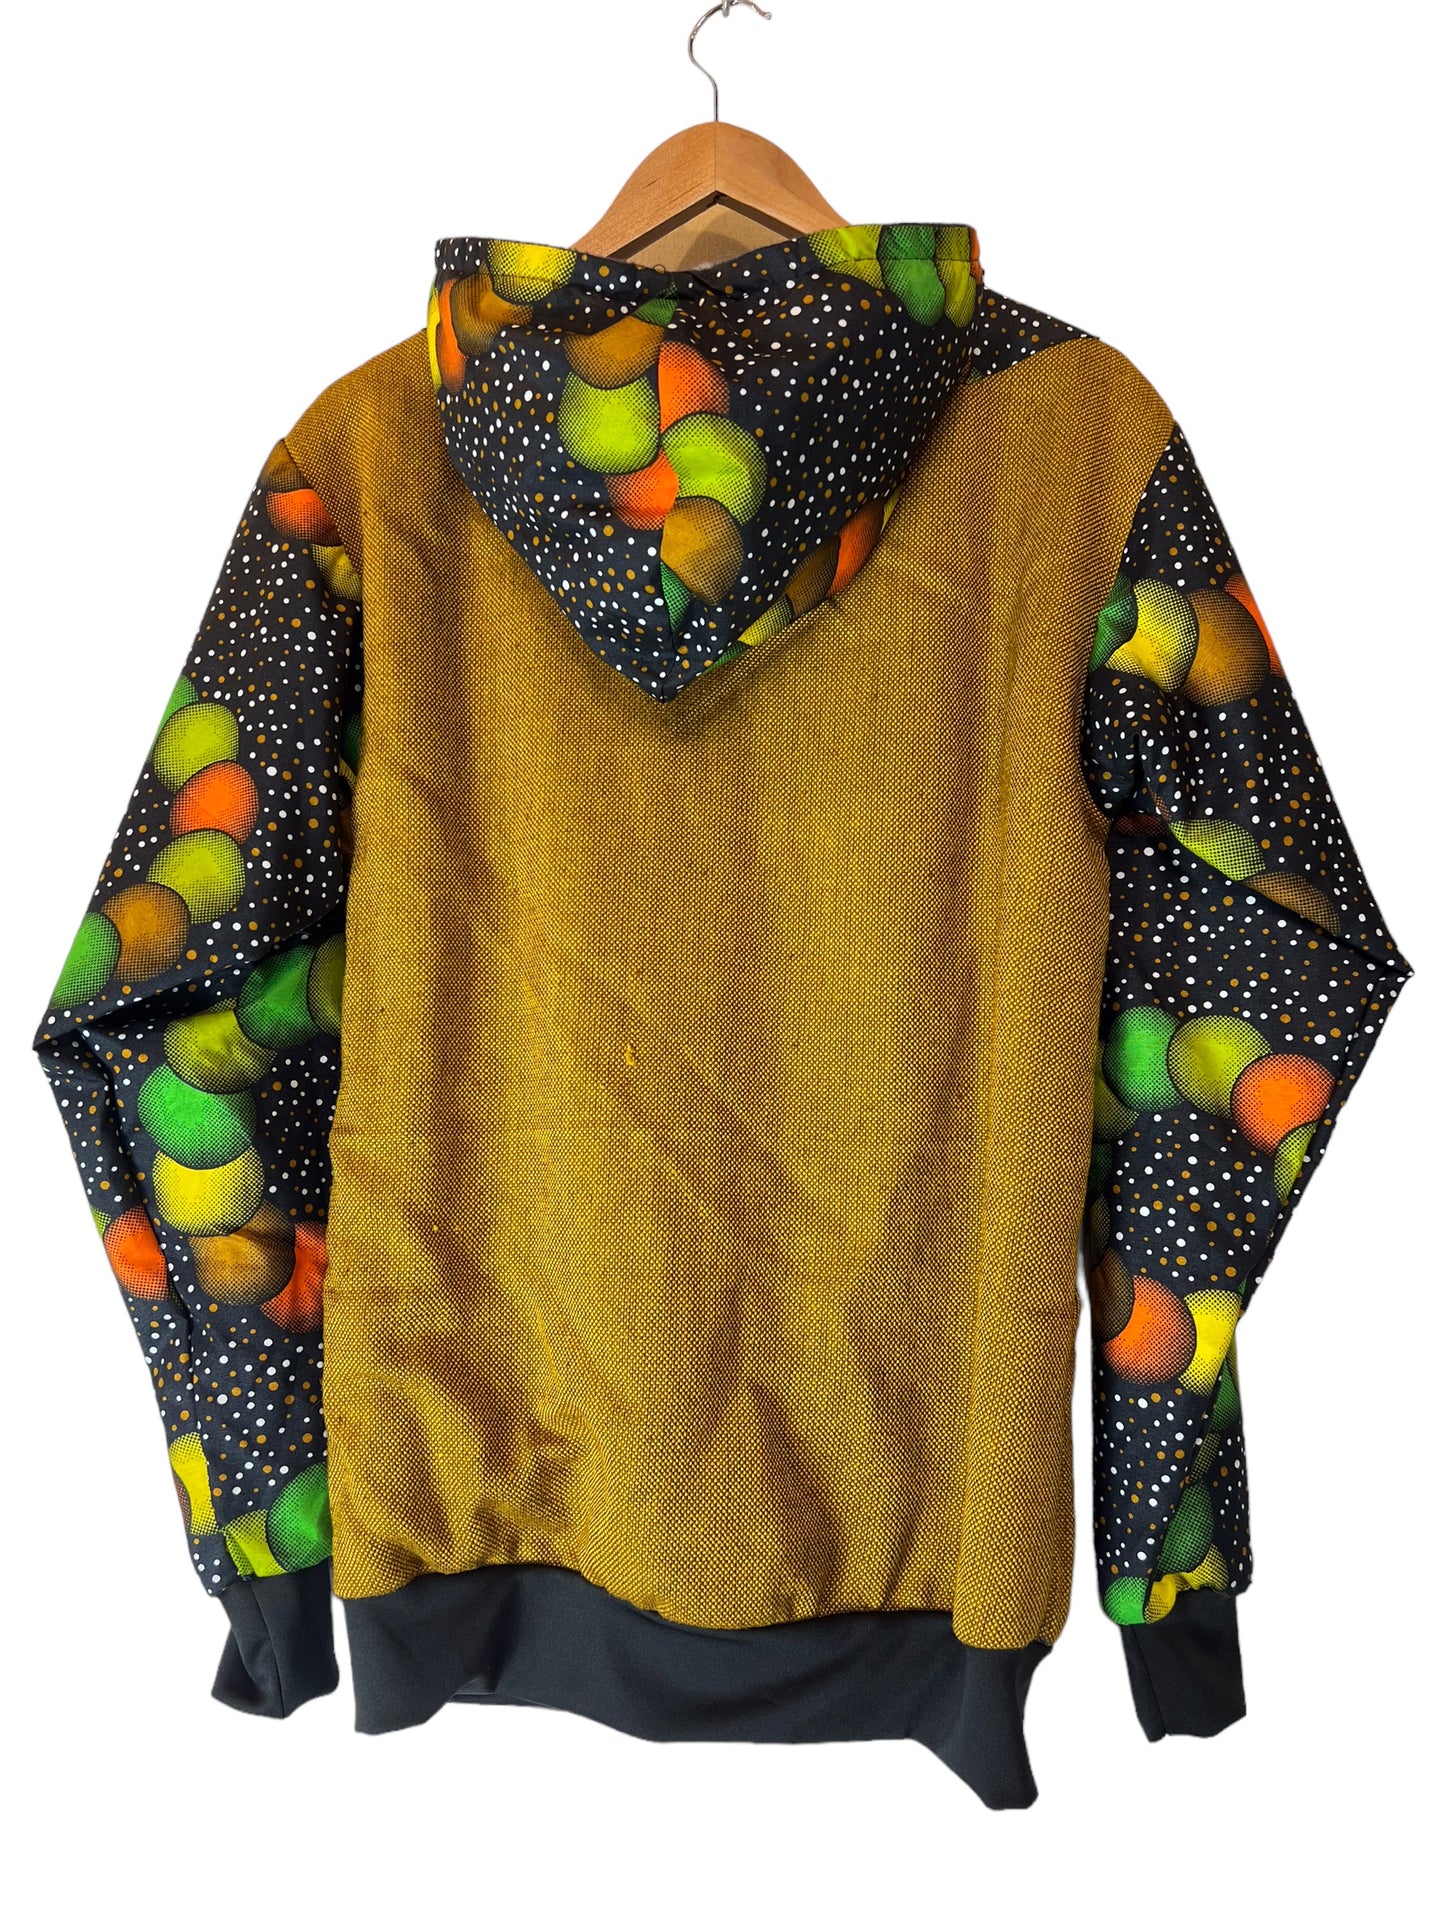 Matsinhe Crafts patterned hoodie (Size M)